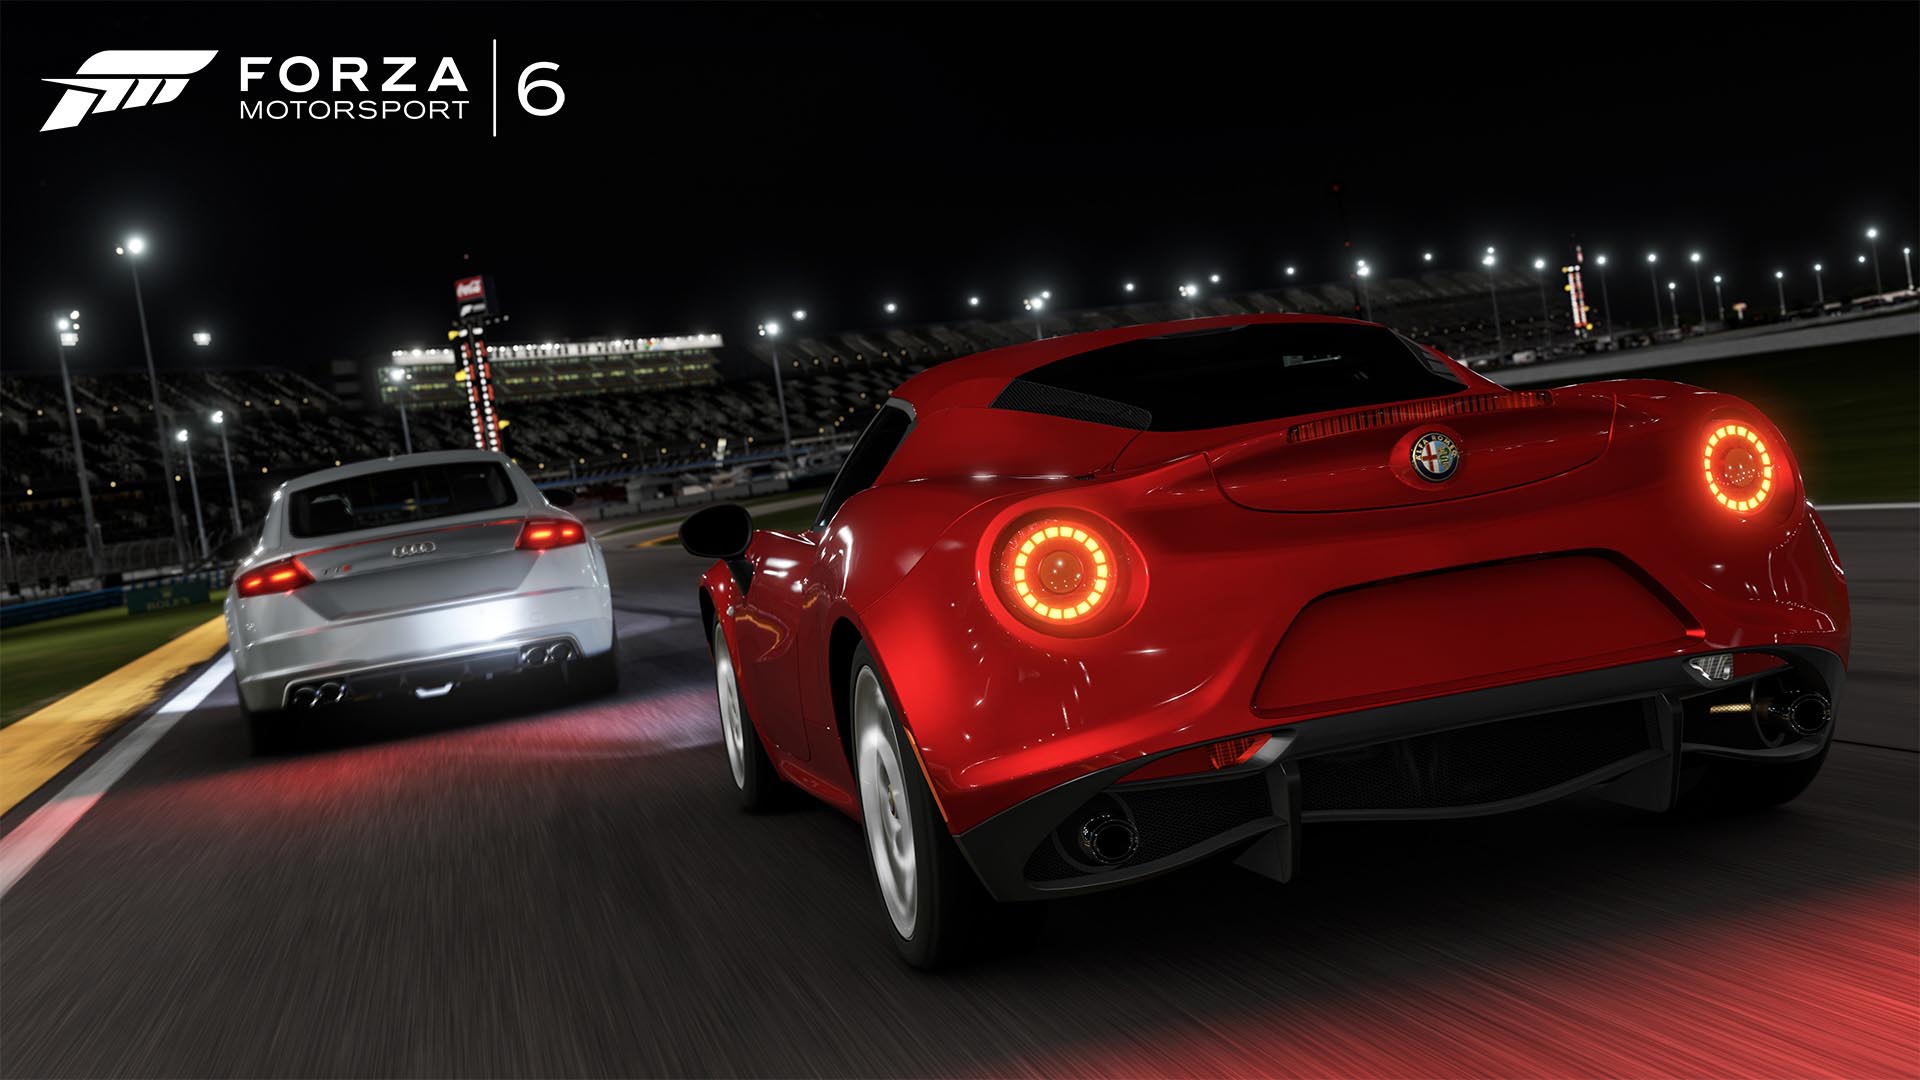 Forza Motorsport 6 Hd Wallpaper Background Image 1920x1080